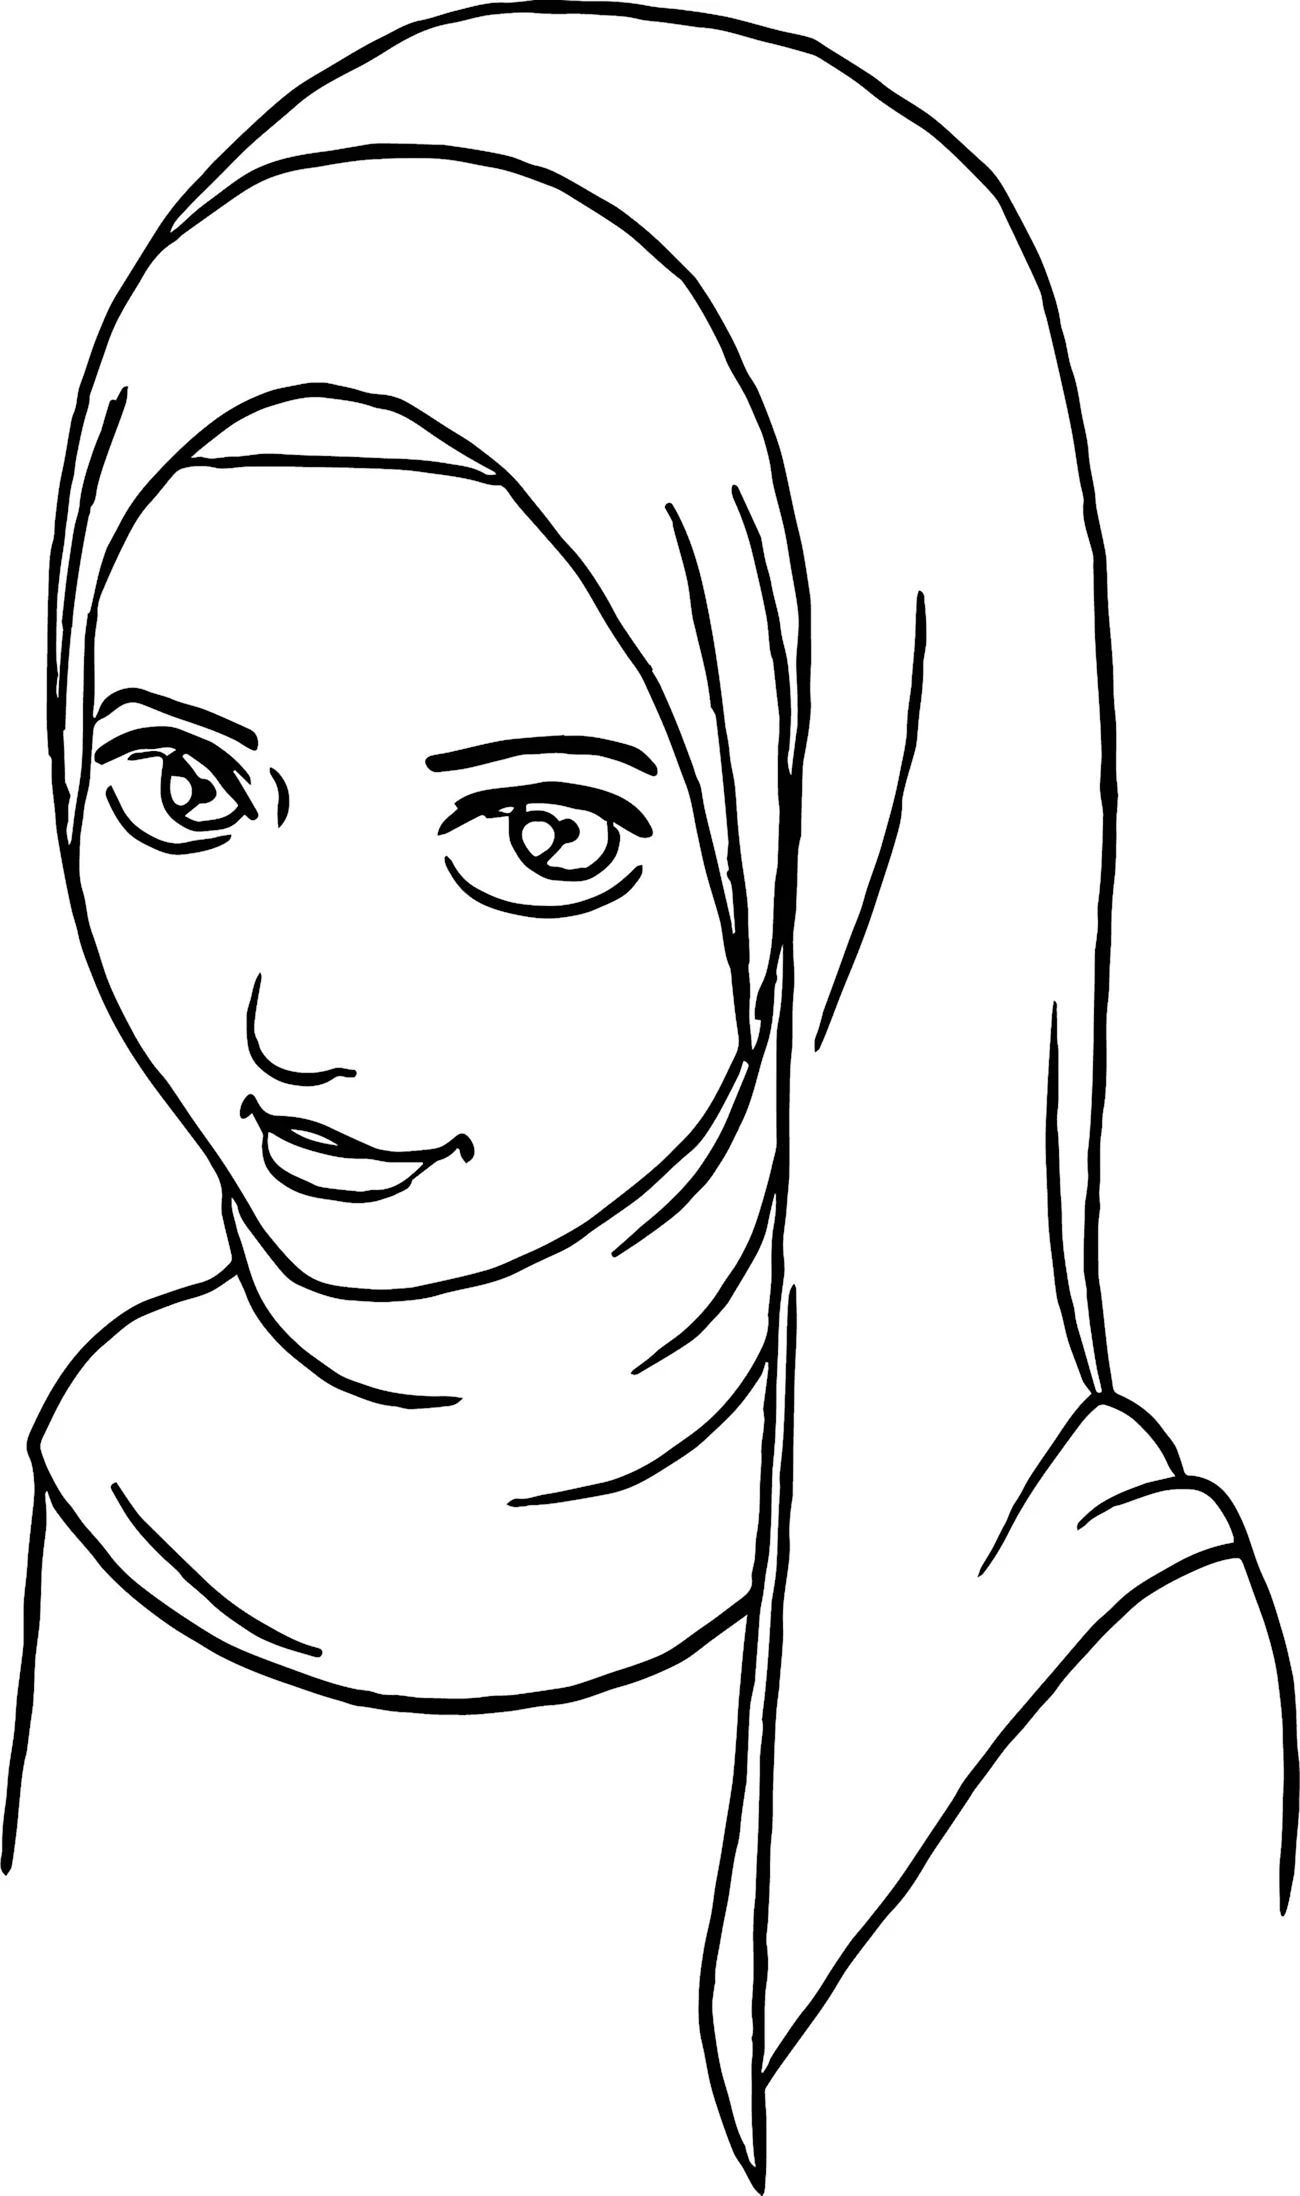 Портрет мусульманки. Для срисовки